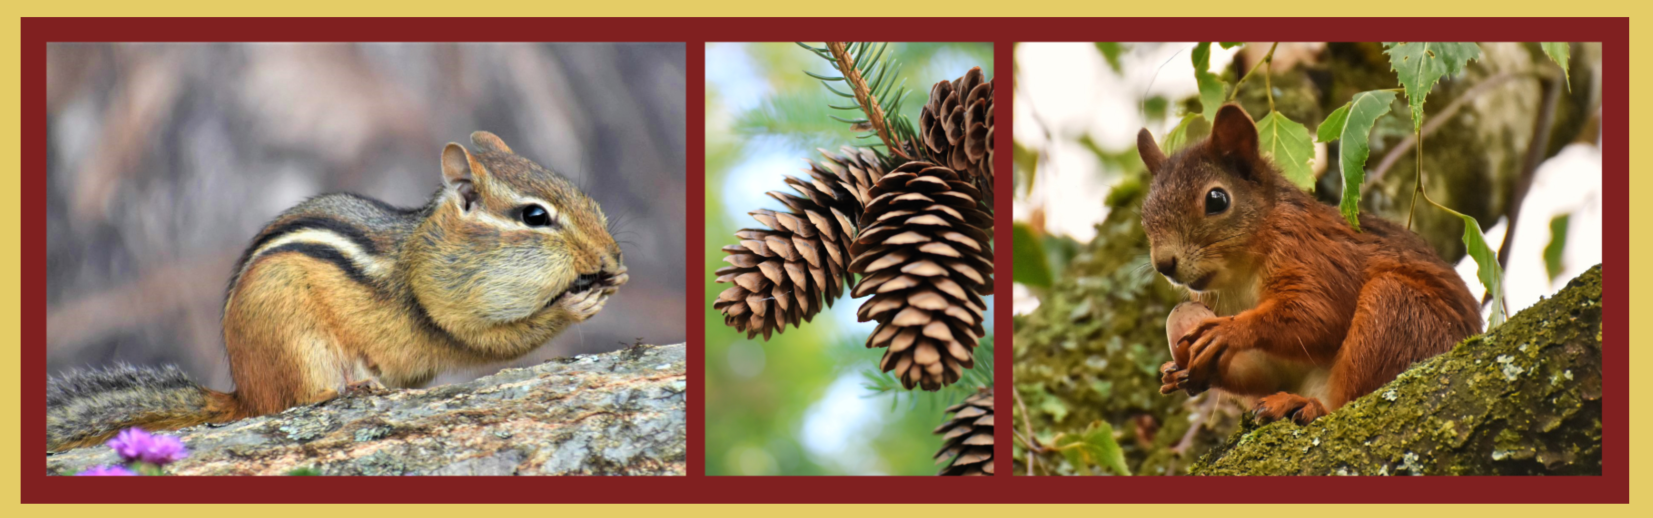 Photos of chipmunk, pine cones and red squirrel